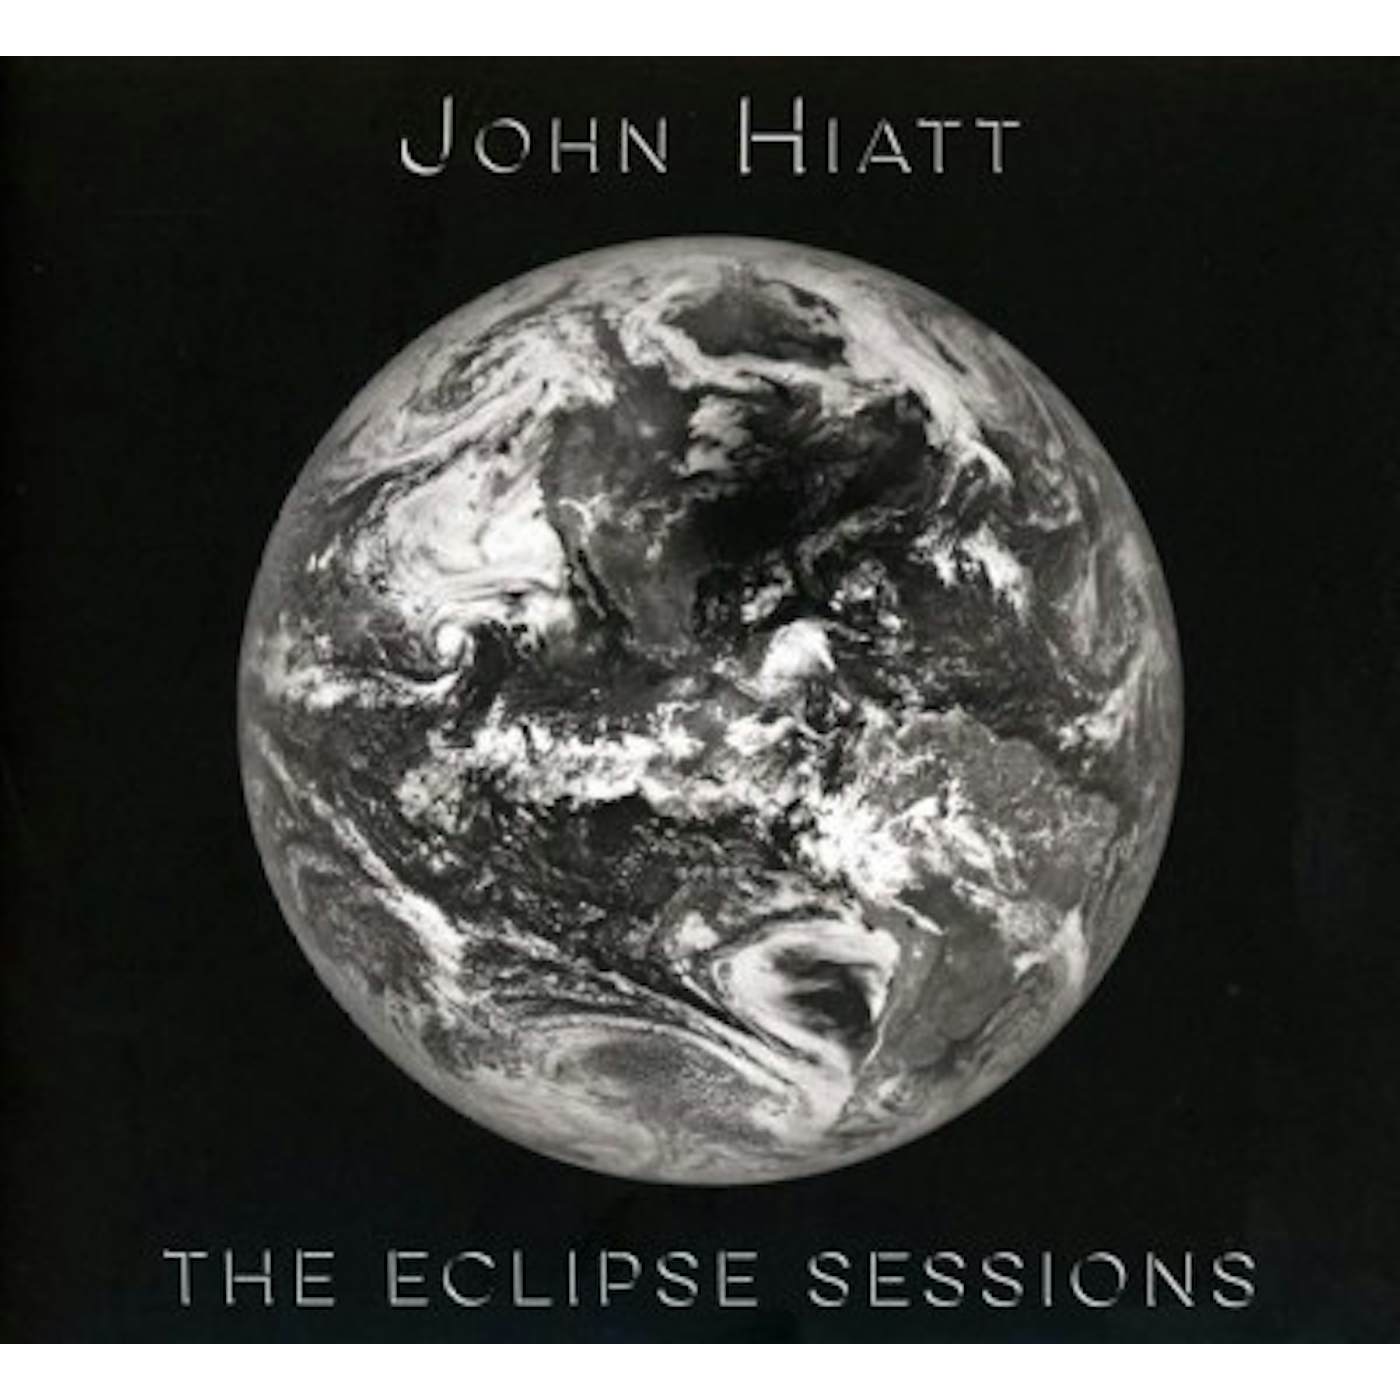 John Hiatt ECLIPSE SESSIONS (DIGIPACK) CD